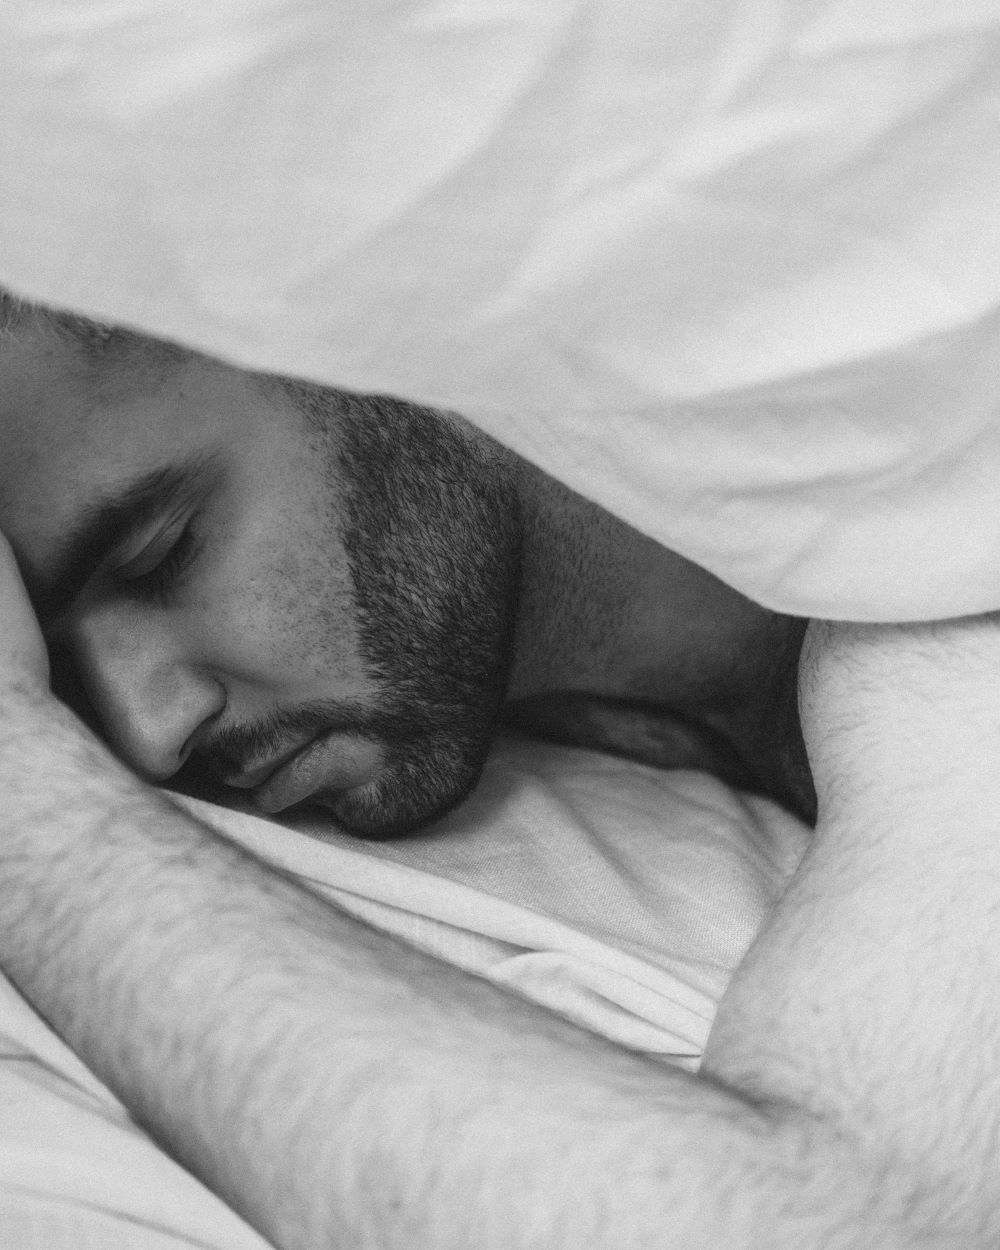 Health Implications of Awakening More than 30 Mins Each Night